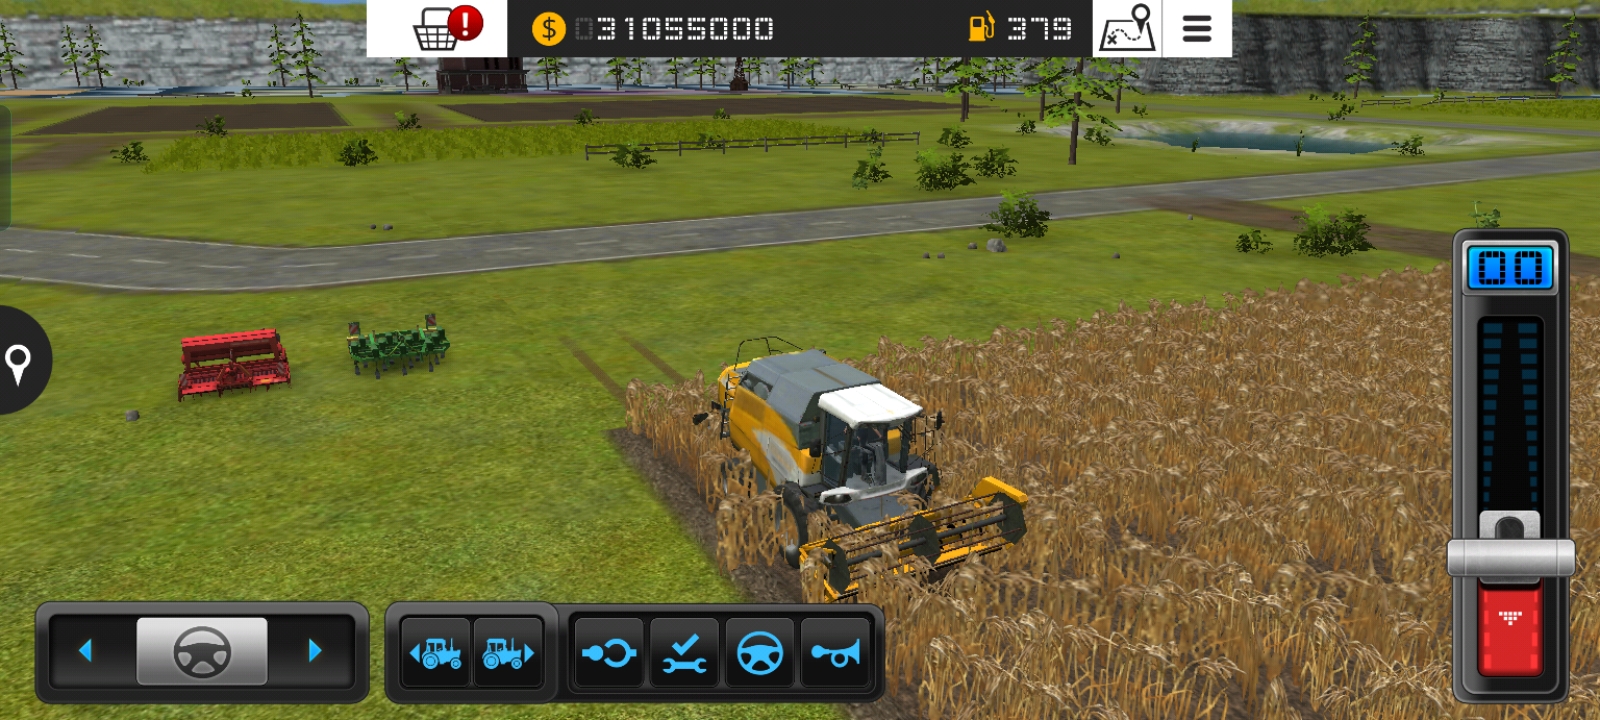 Farming Simulator 23 PRO v1.5 MOD APK (Unlimited Currency) Download